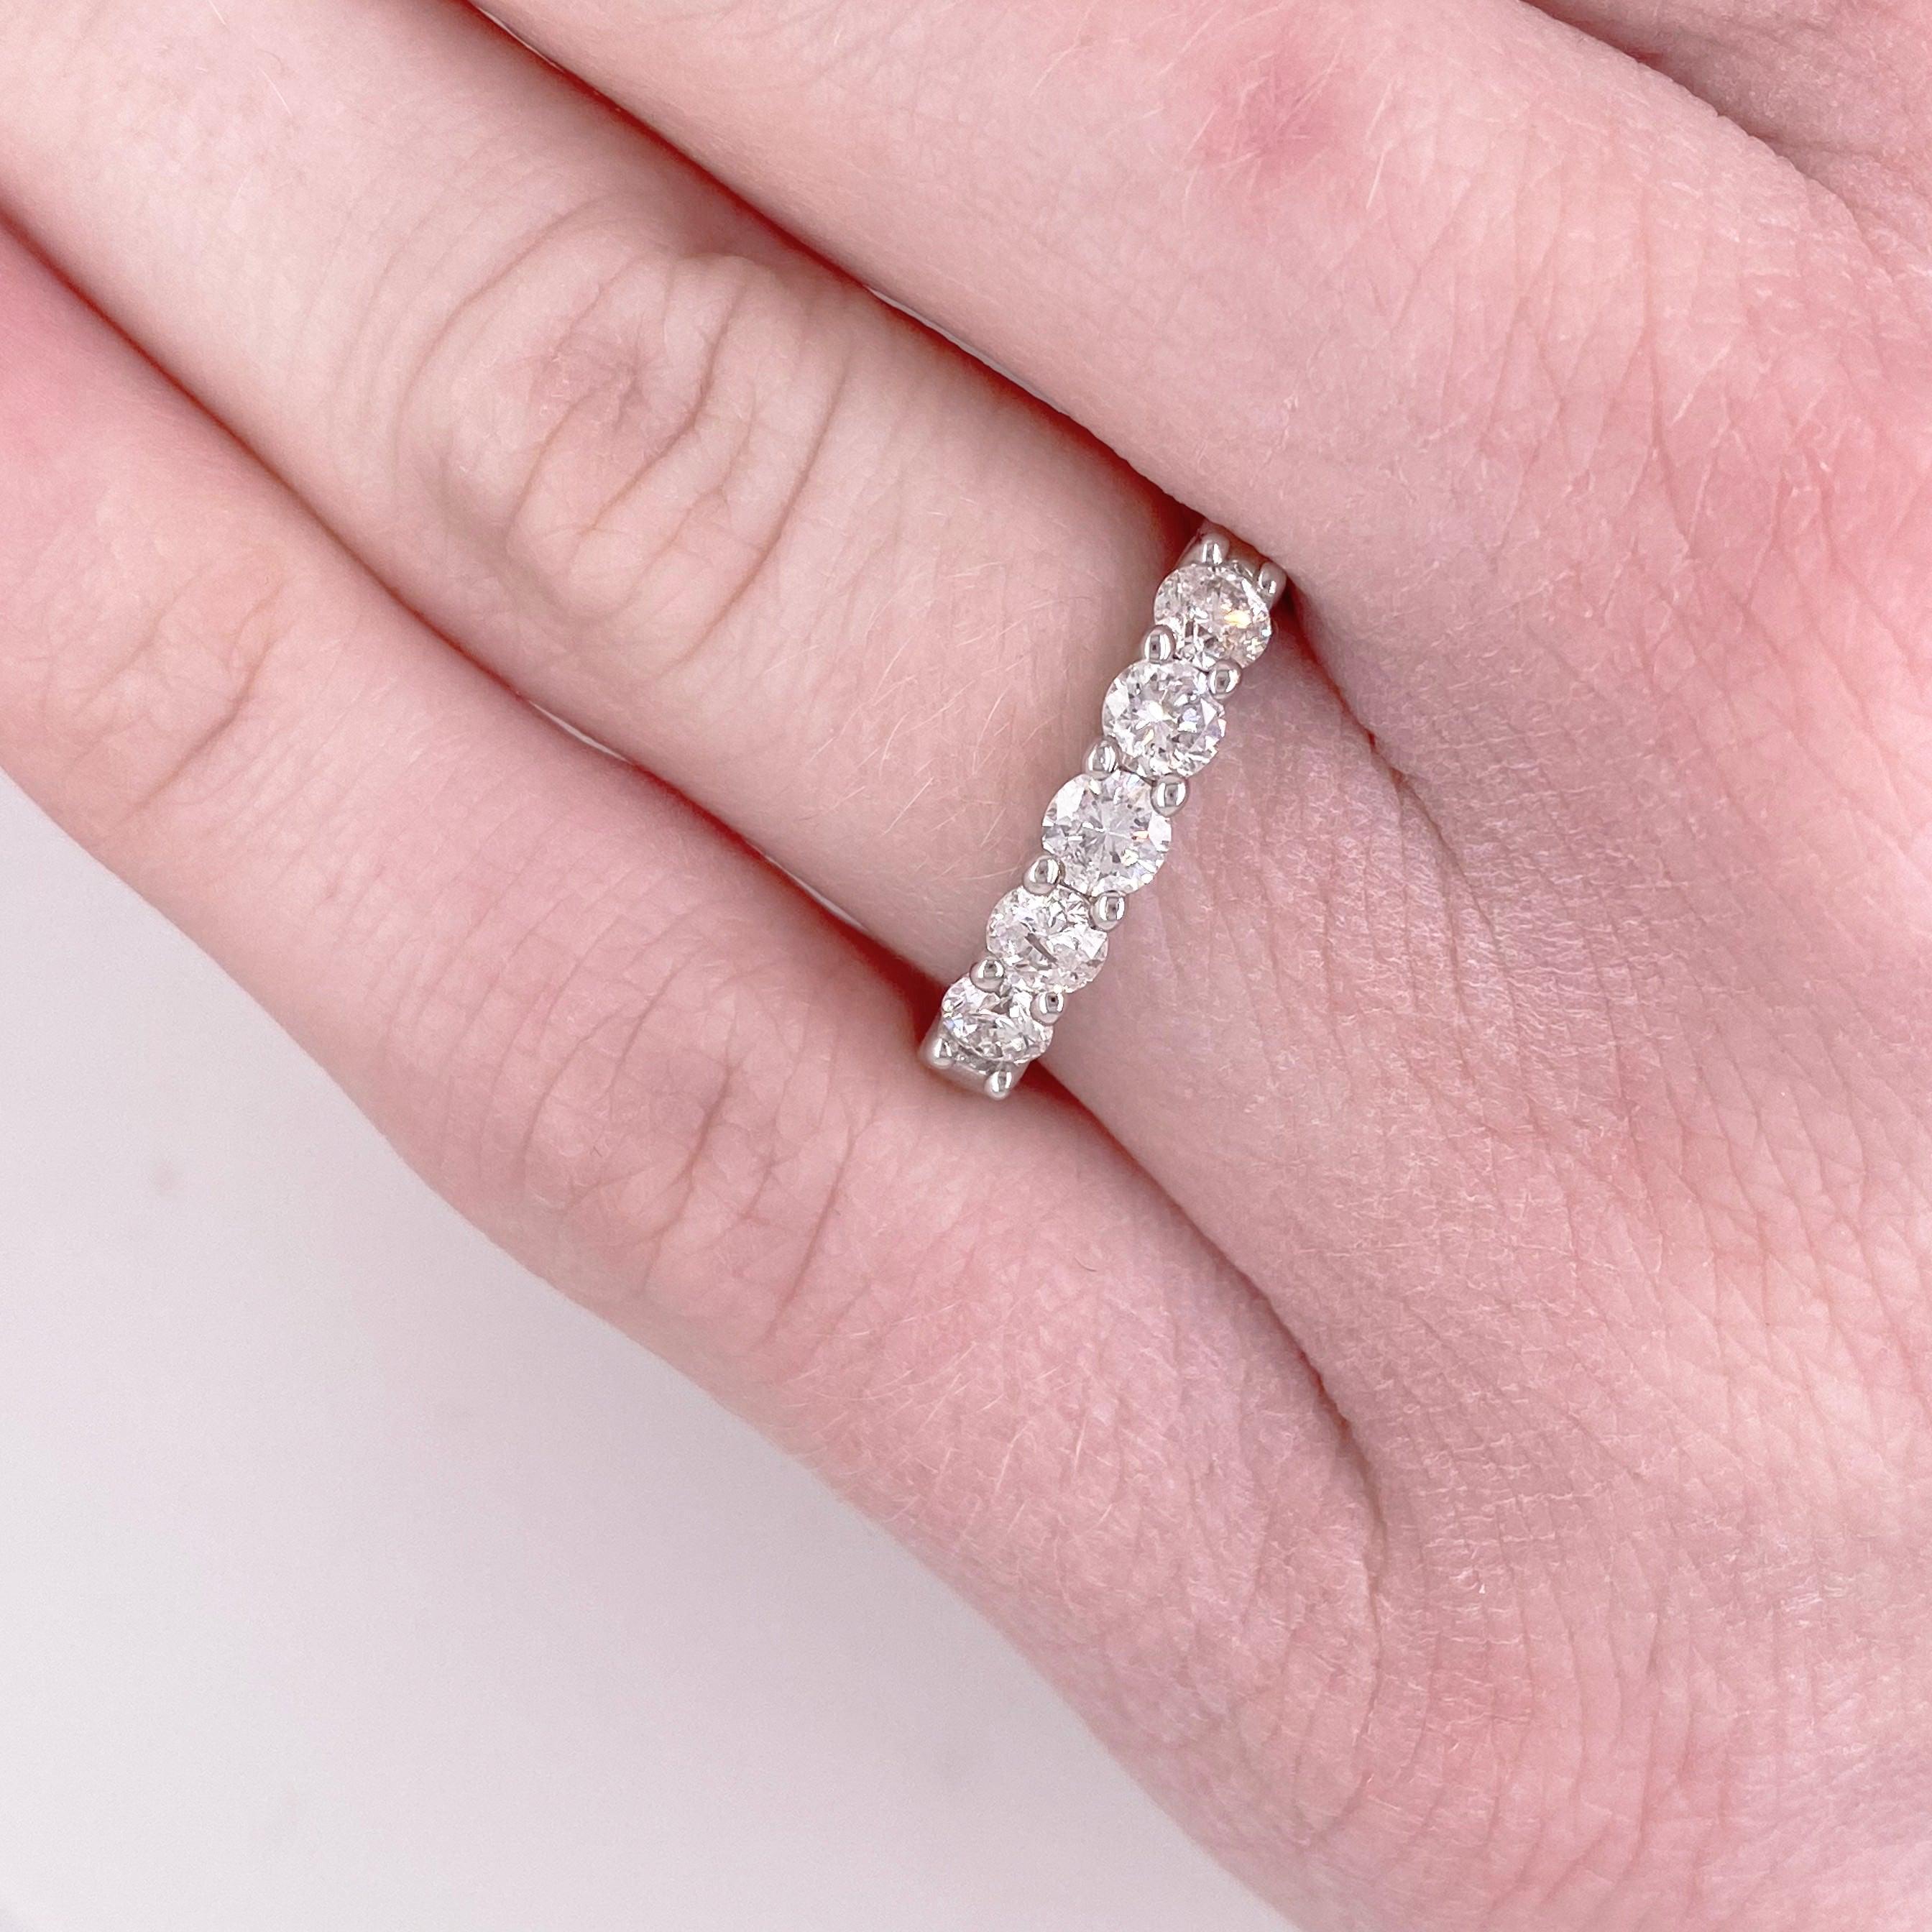 For Sale:  Five Diamond Band Ring, White Gold, 1.00 Carat Diamonds, Wedding Band 2